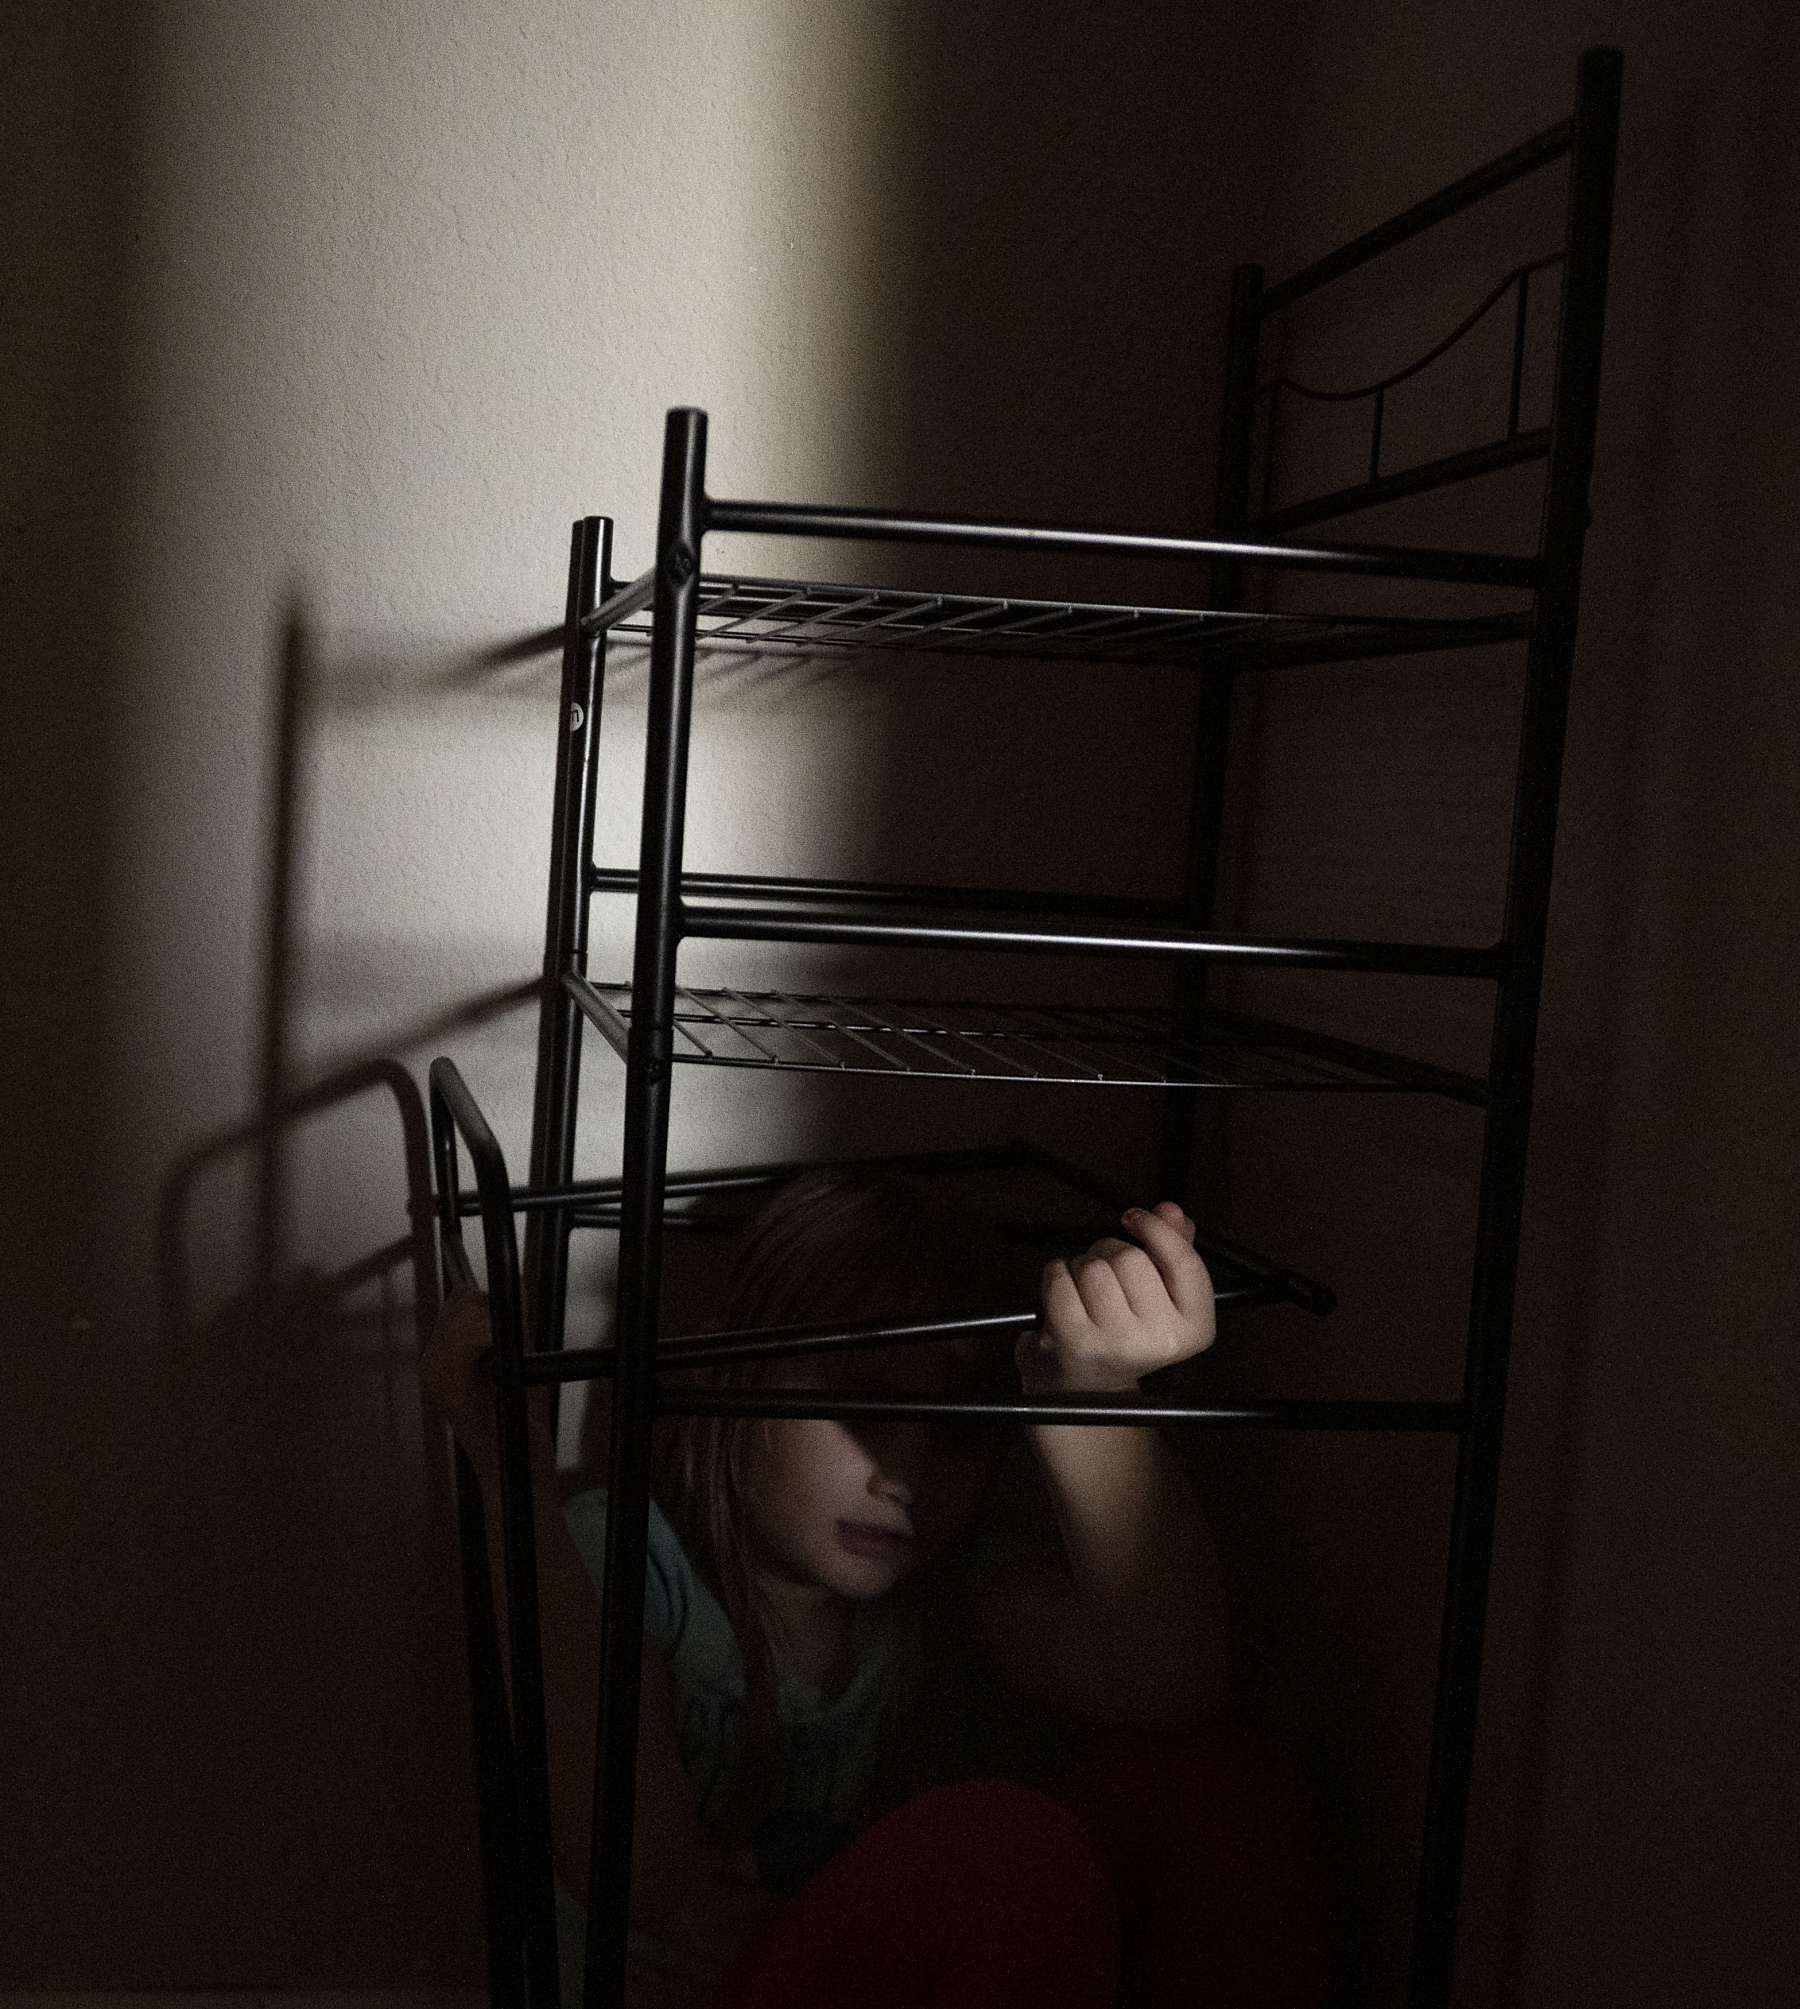 A child under a shelf in a dark room